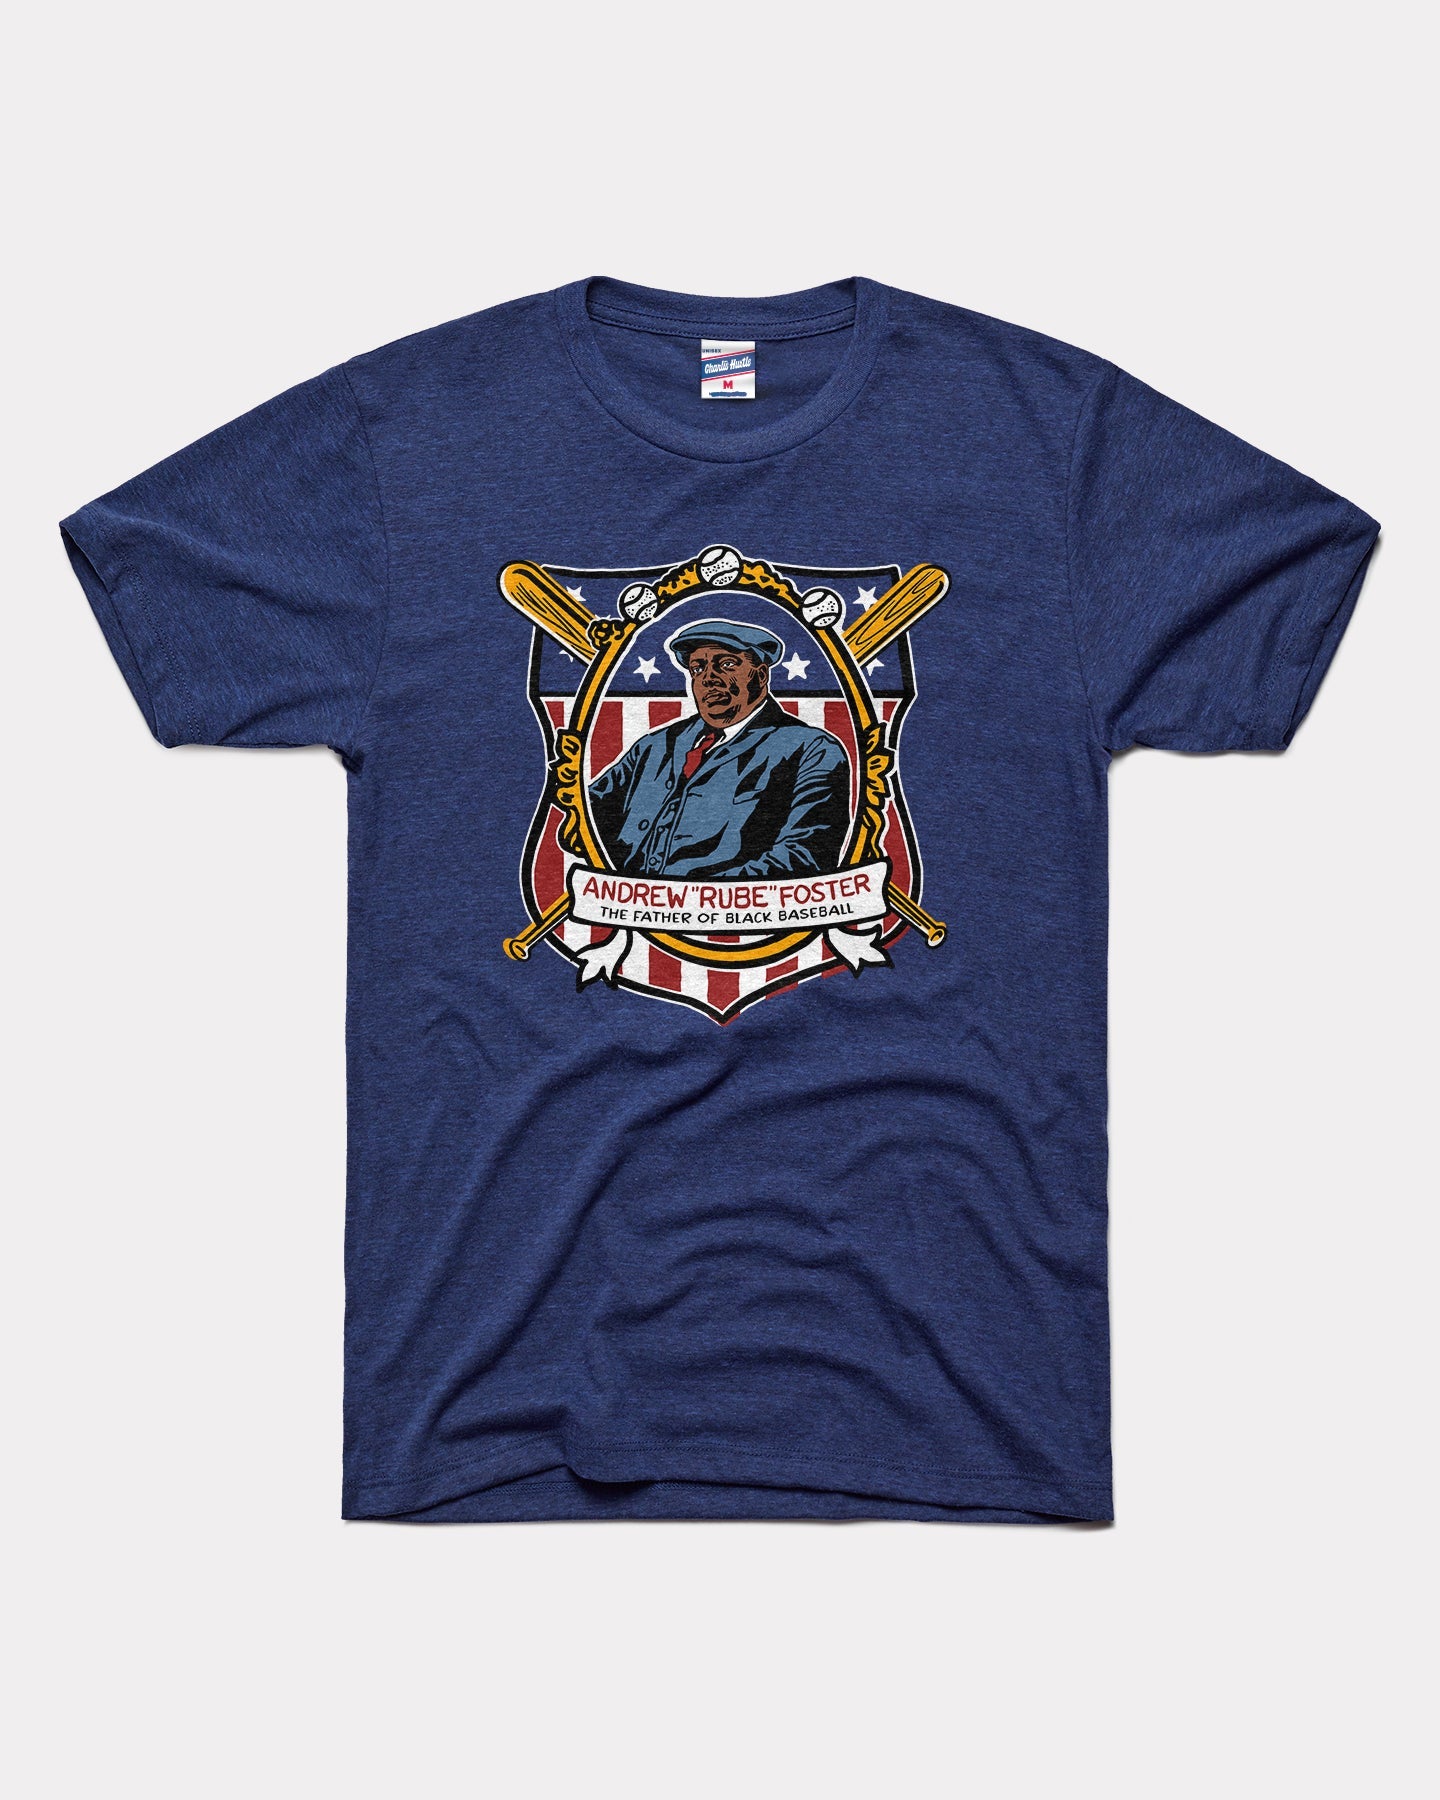 Washington Nationals Navy Blue T-Shirt (S,M,L,XL,XXL)